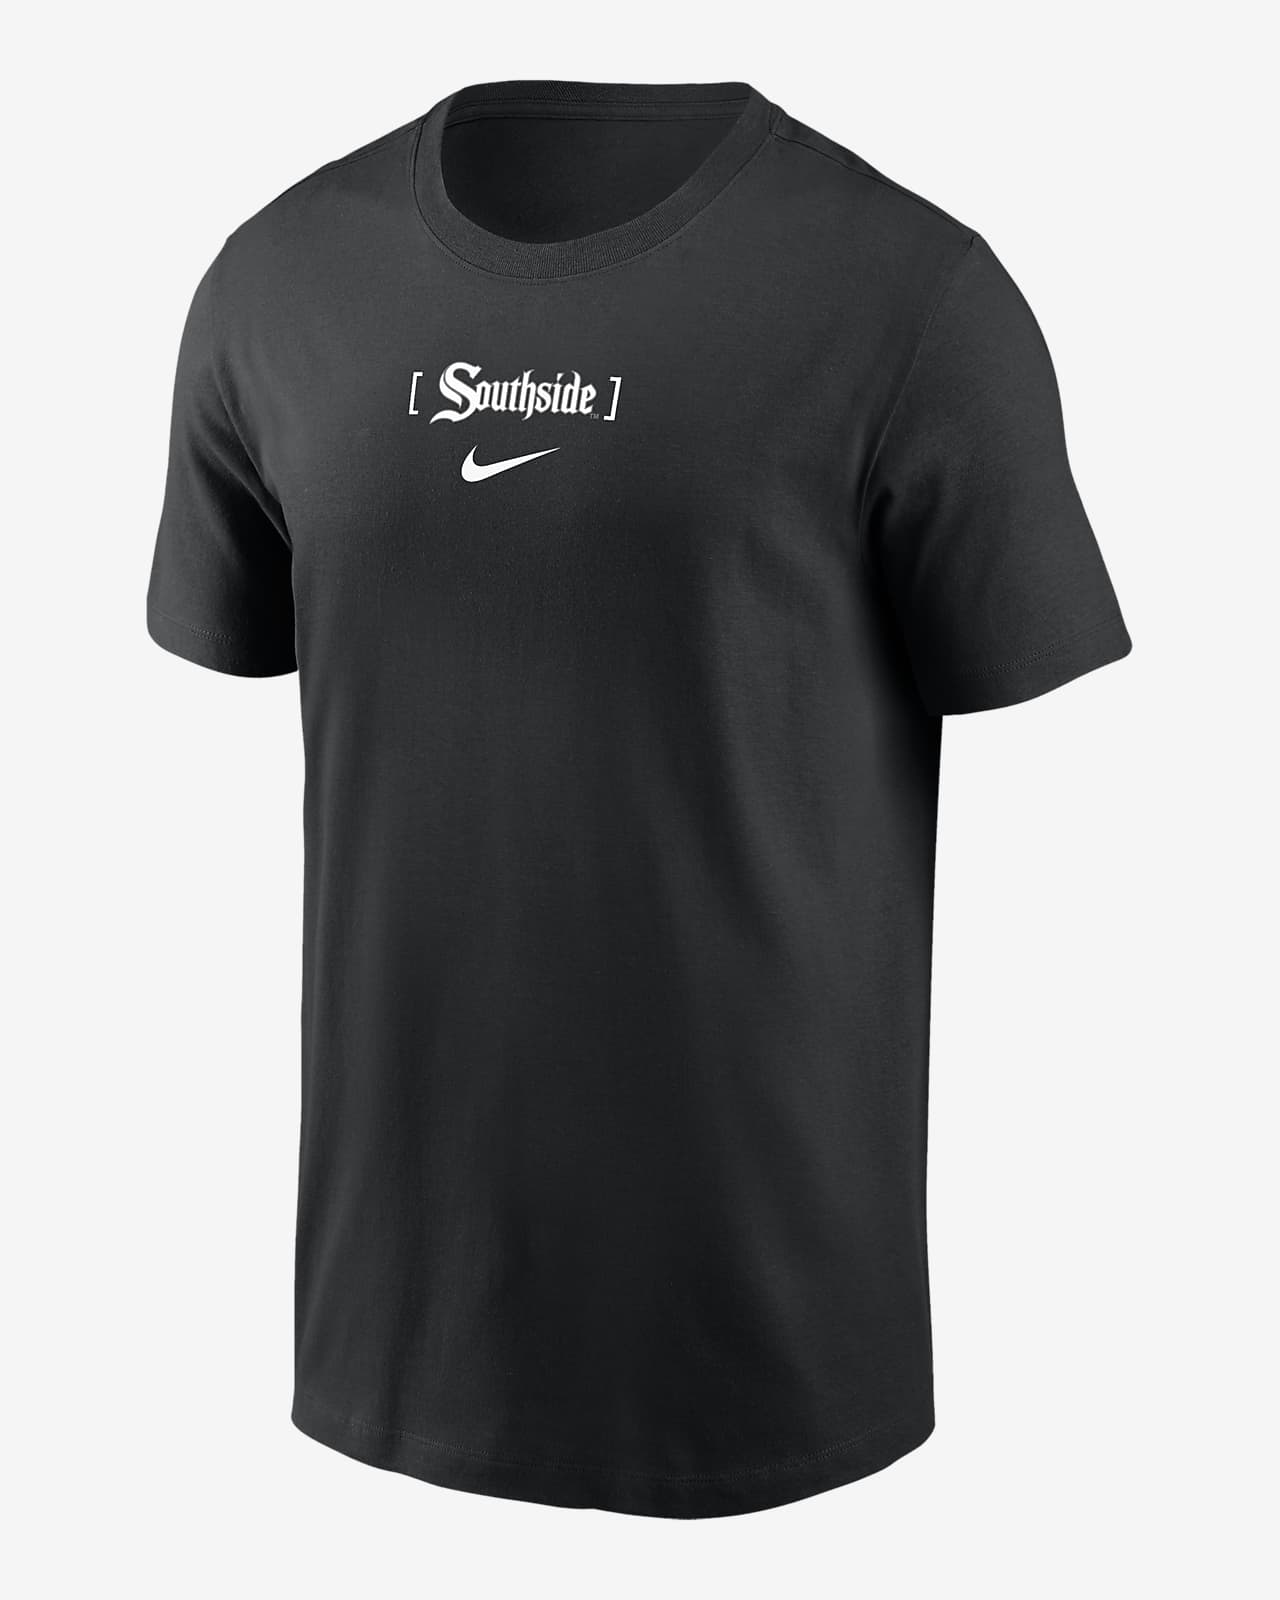 Chicago White Sox City Connect Men's Nike MLB T-Shirt